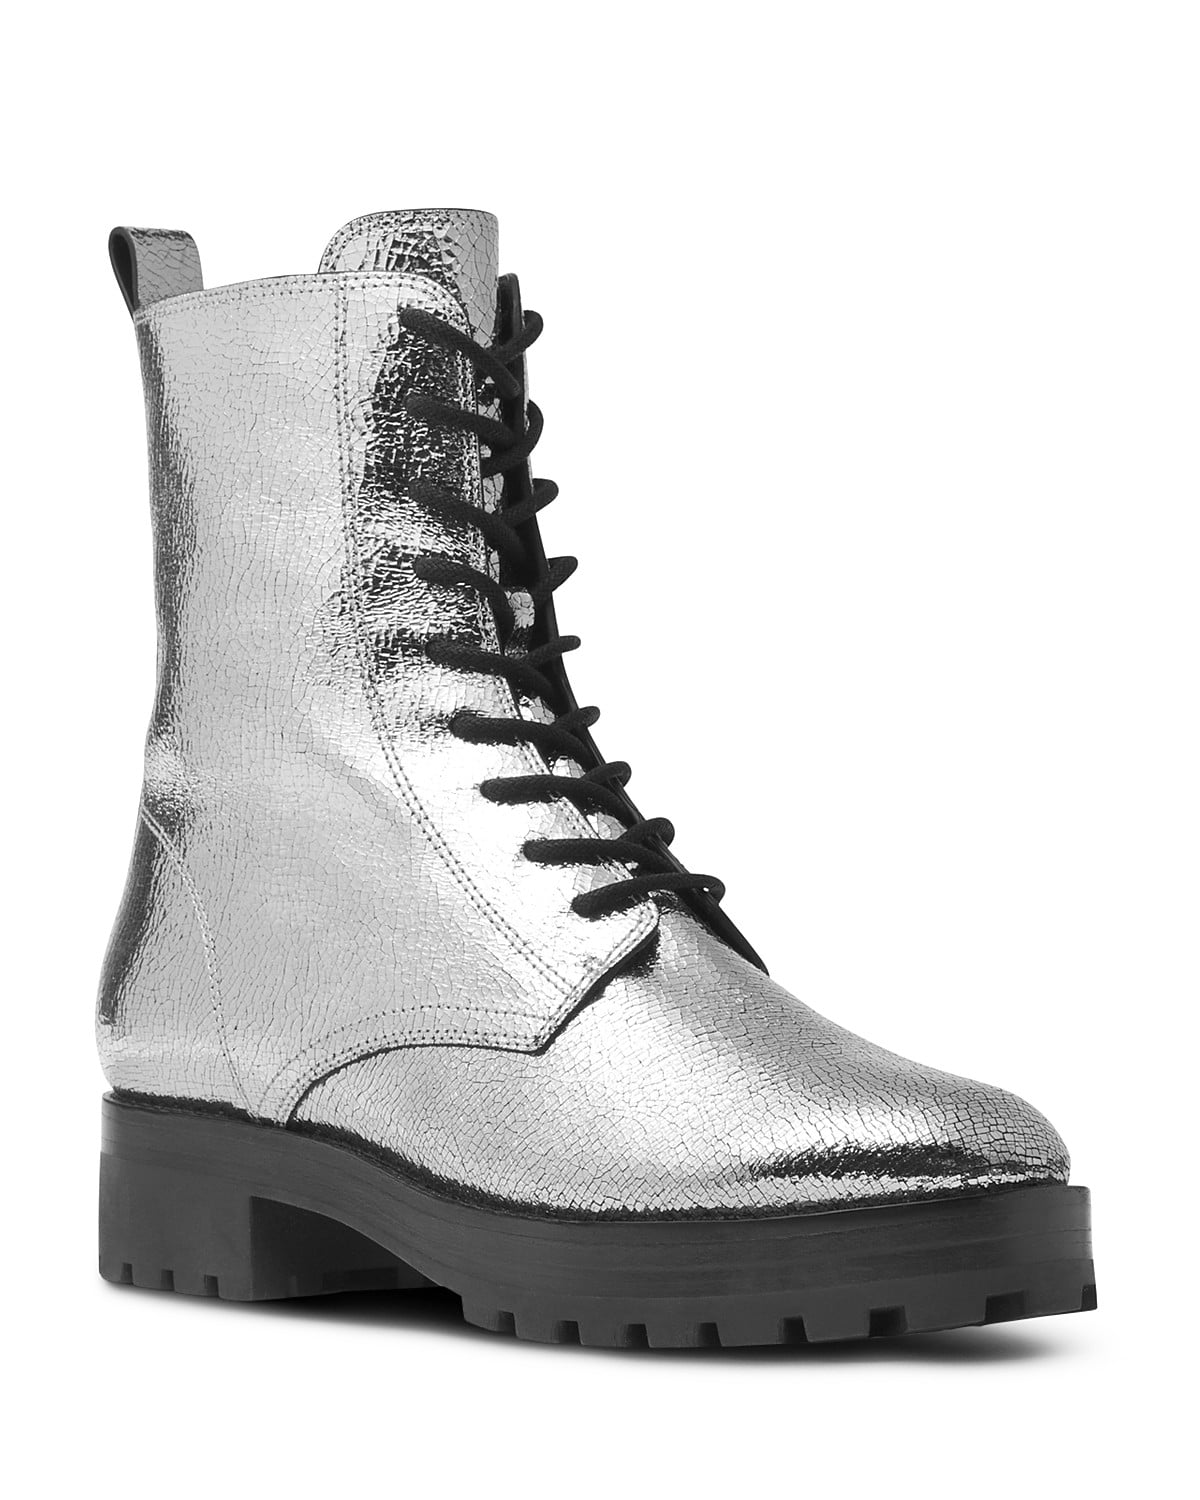 Taylor Swift's Silver Combat Boots | POPSUGAR Fashion